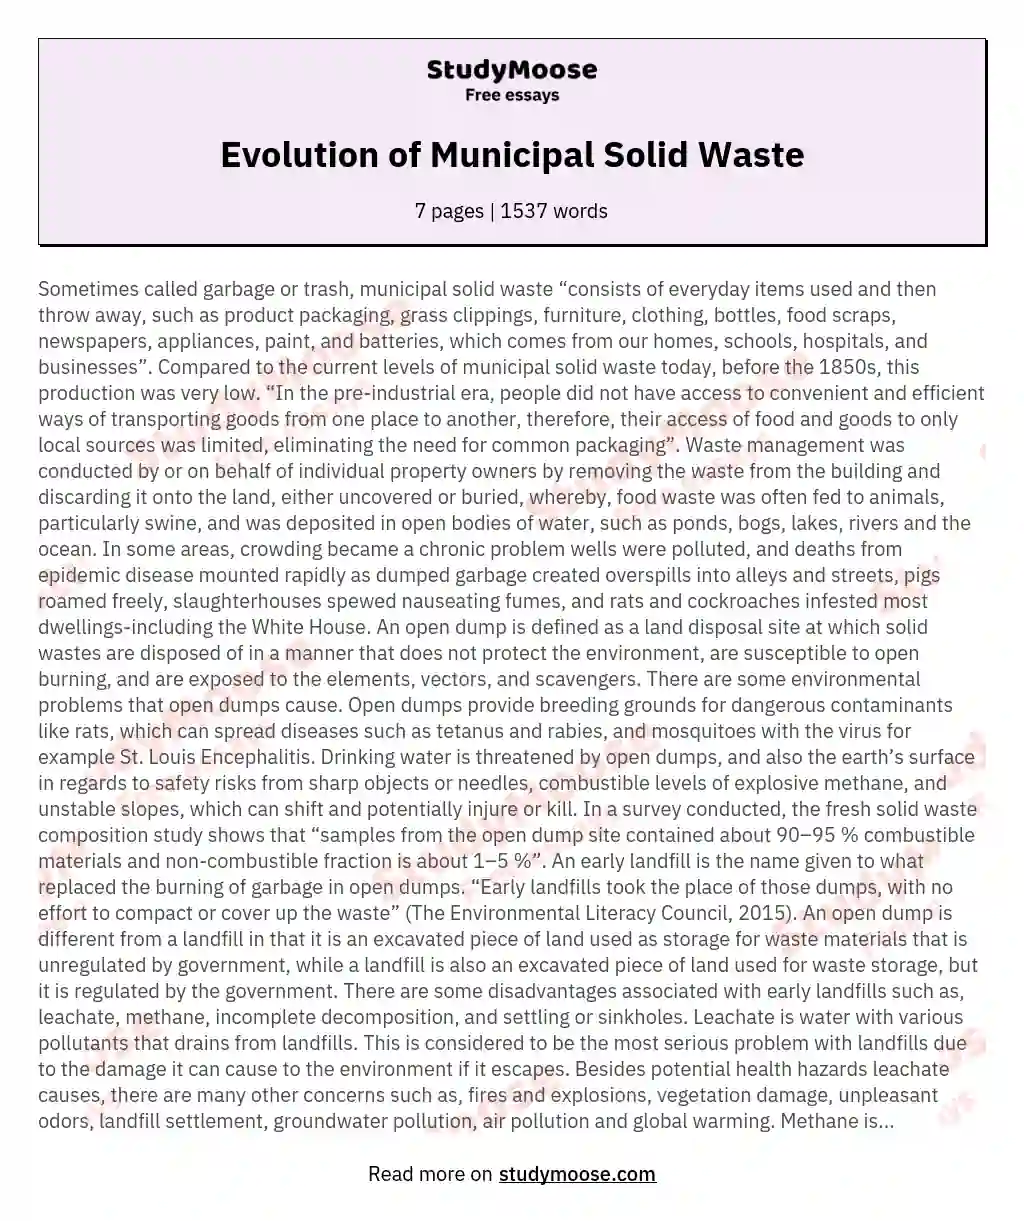 Evolution of Municipal Solid Waste essay